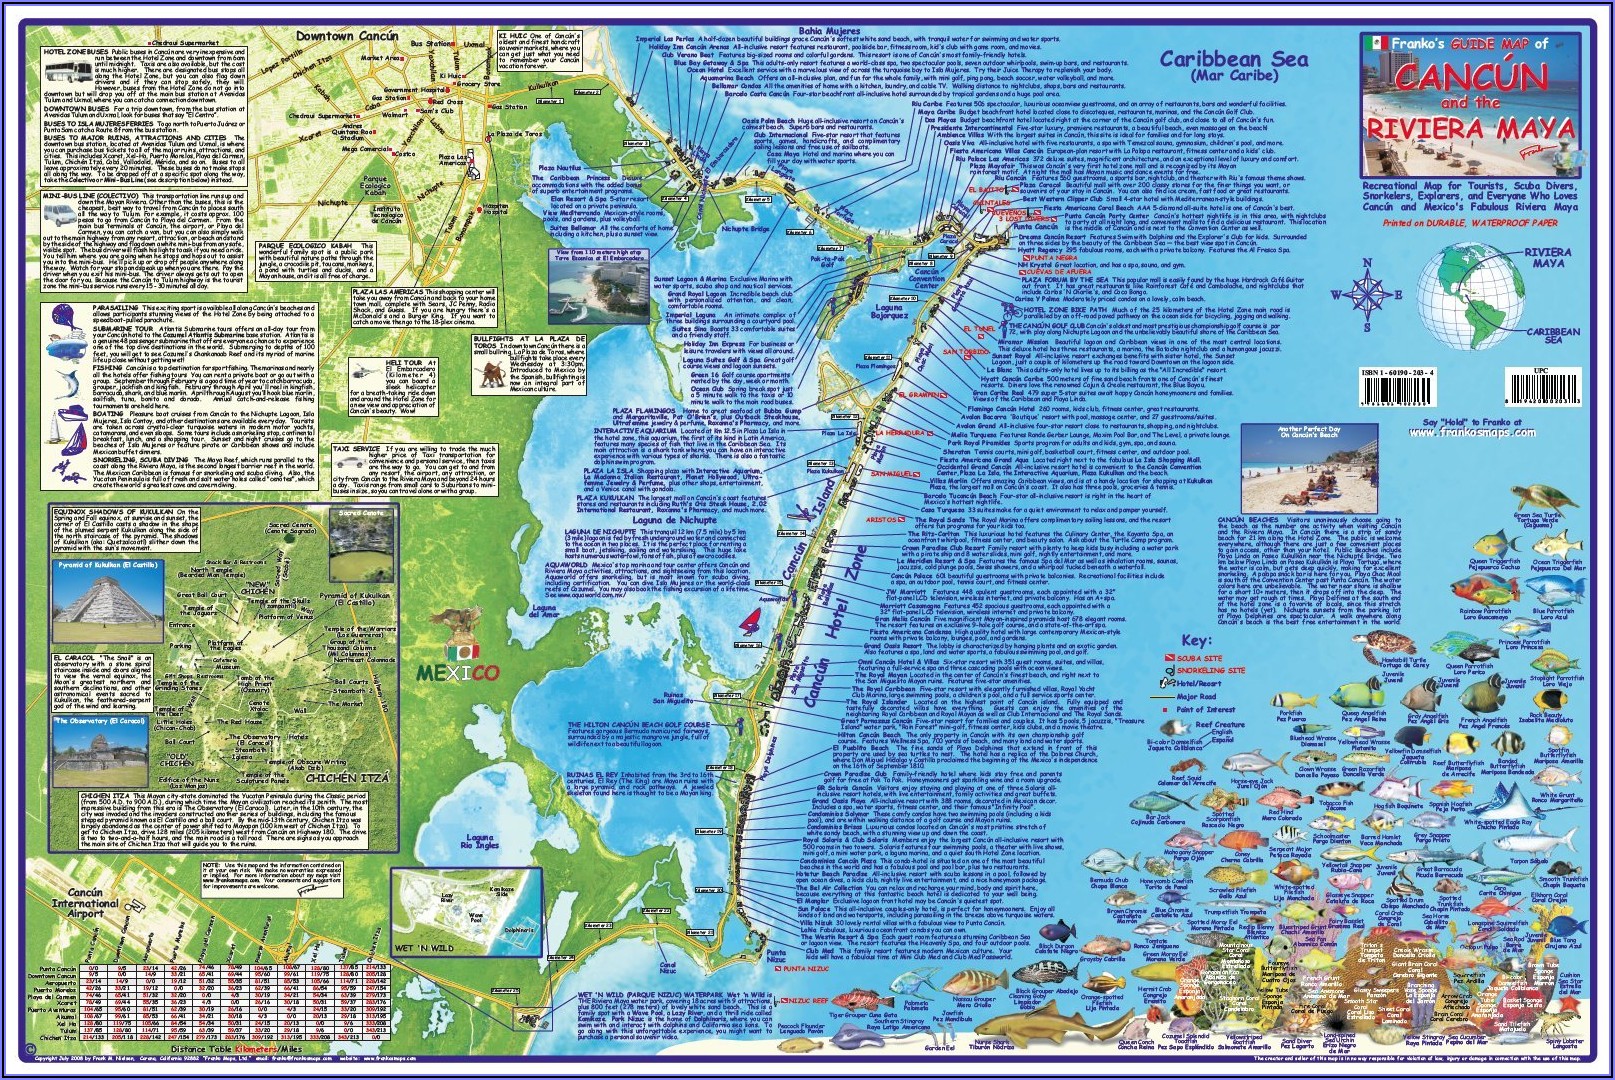 Cancun Riviera Maya Hotel Map